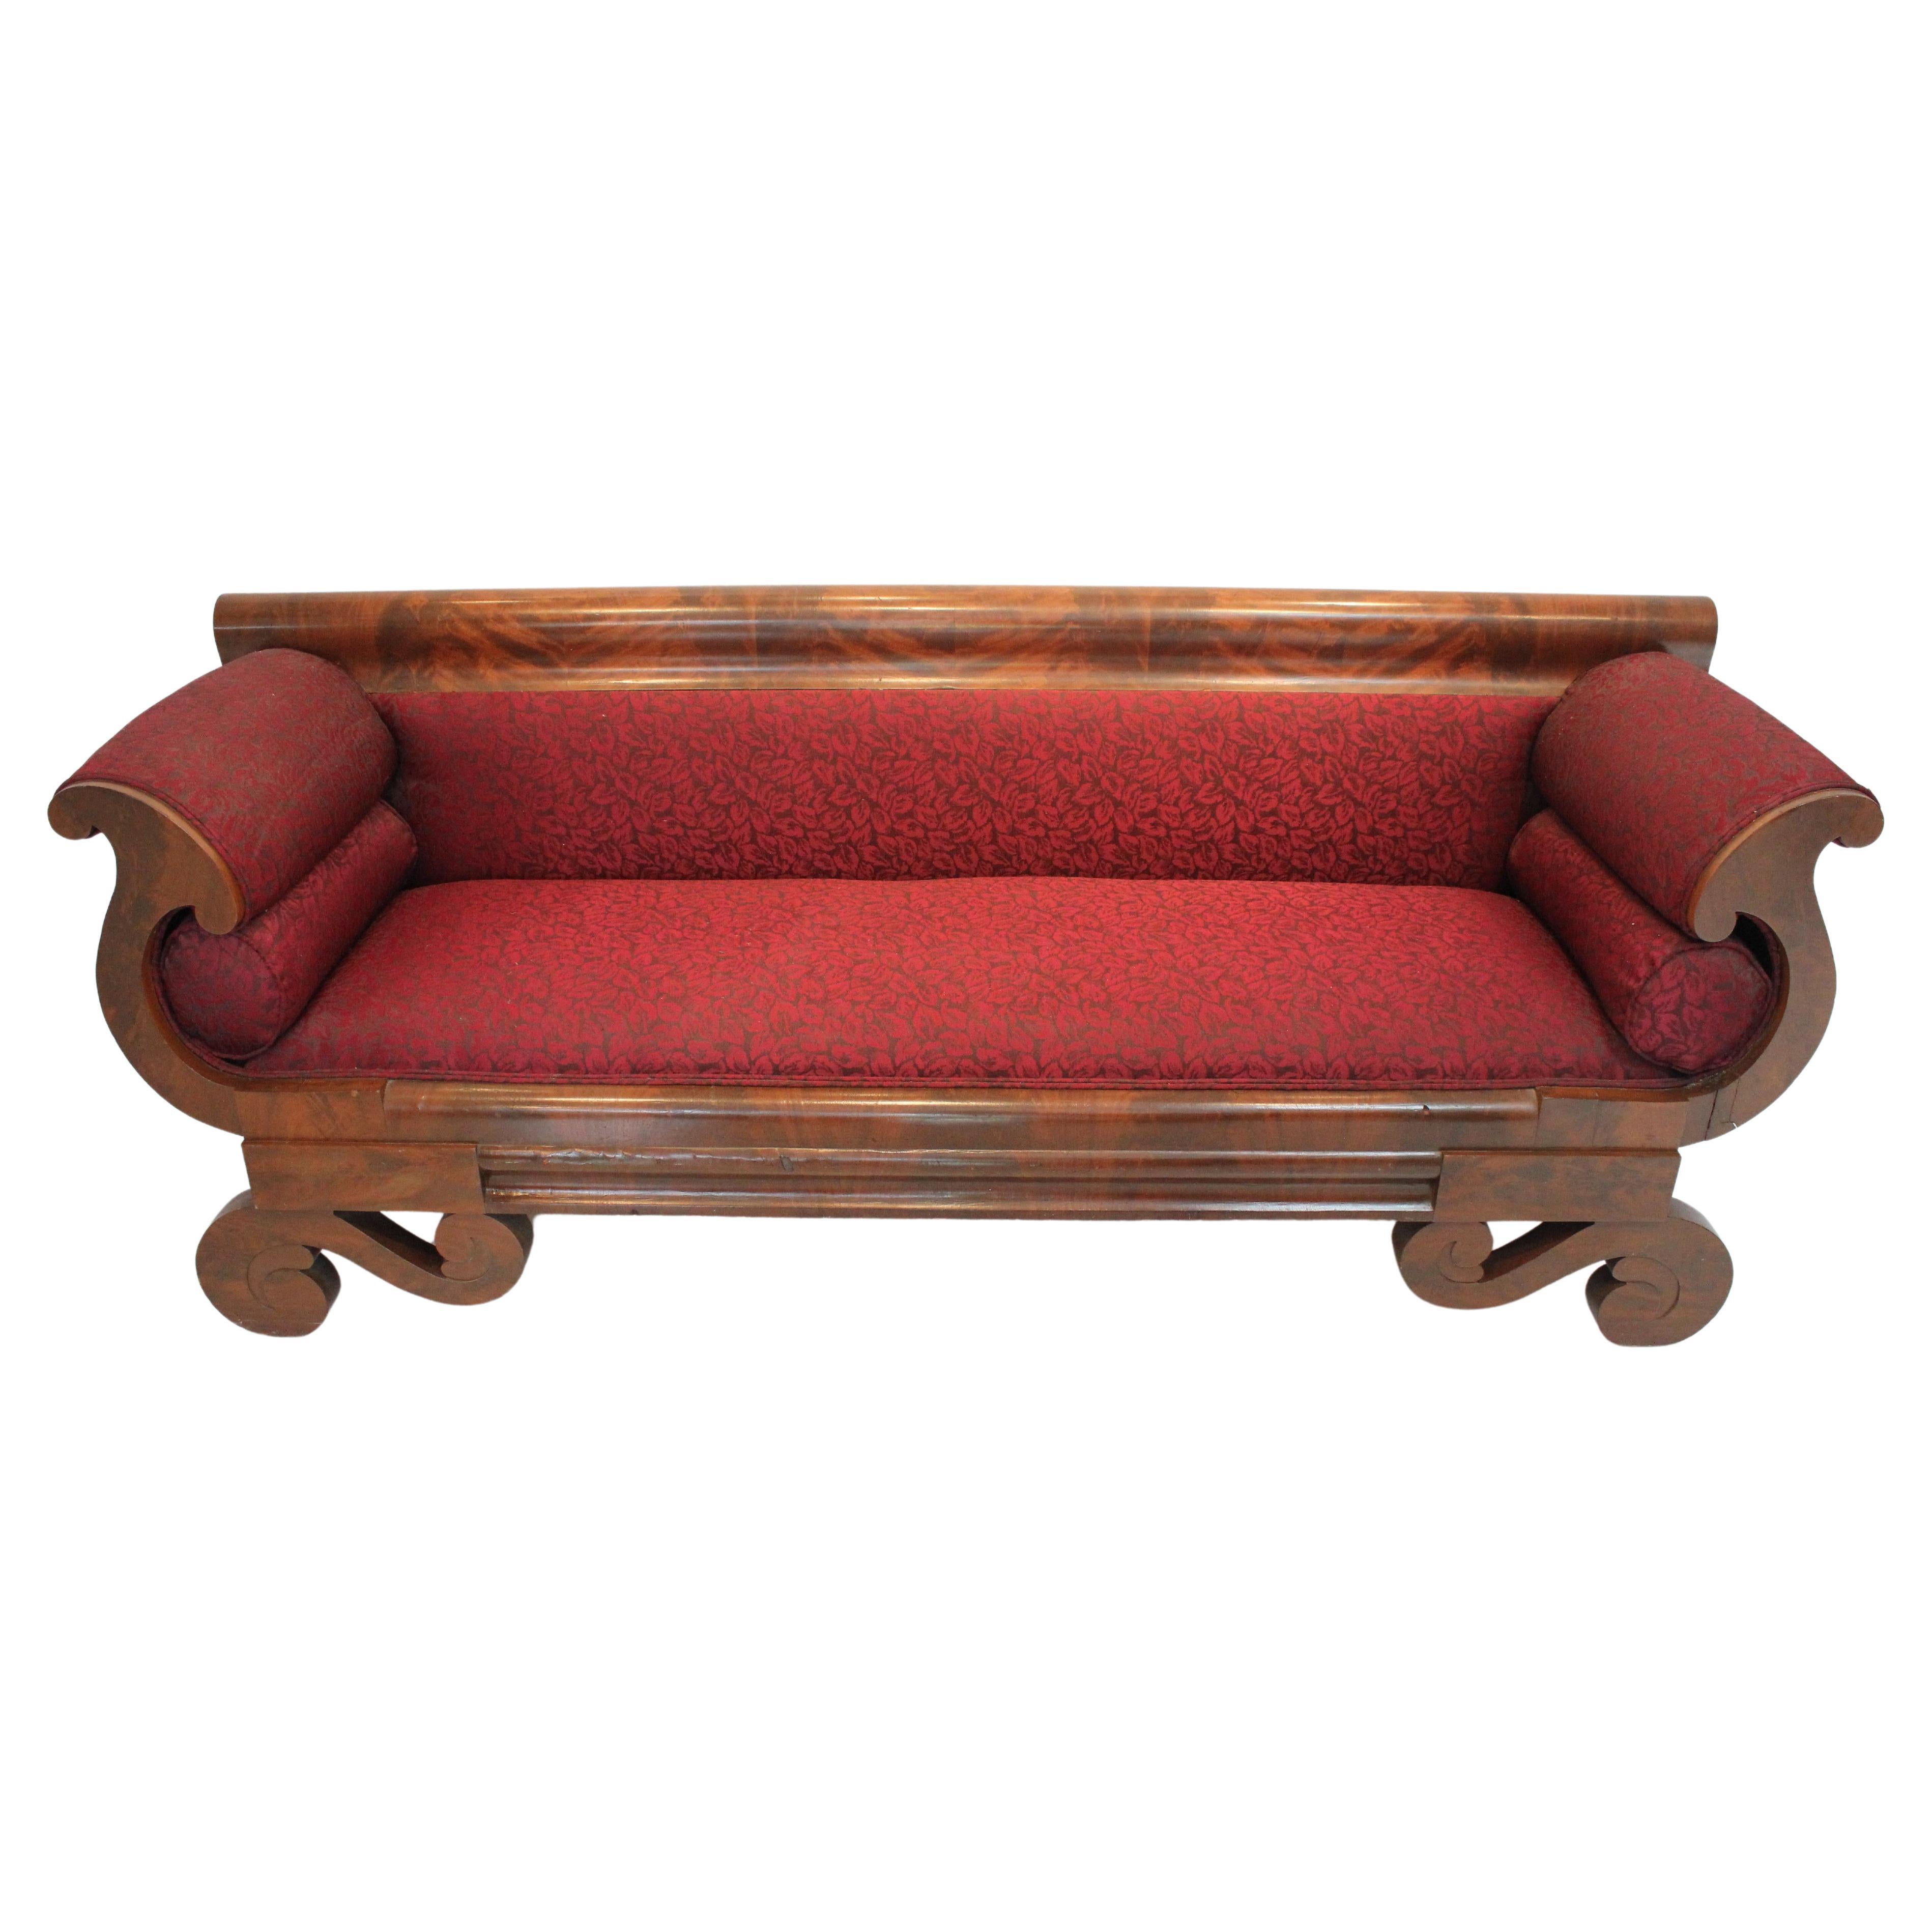 Period Antique American Classical Empire Flame Mahogany Sofa Circa 1840 For Sale